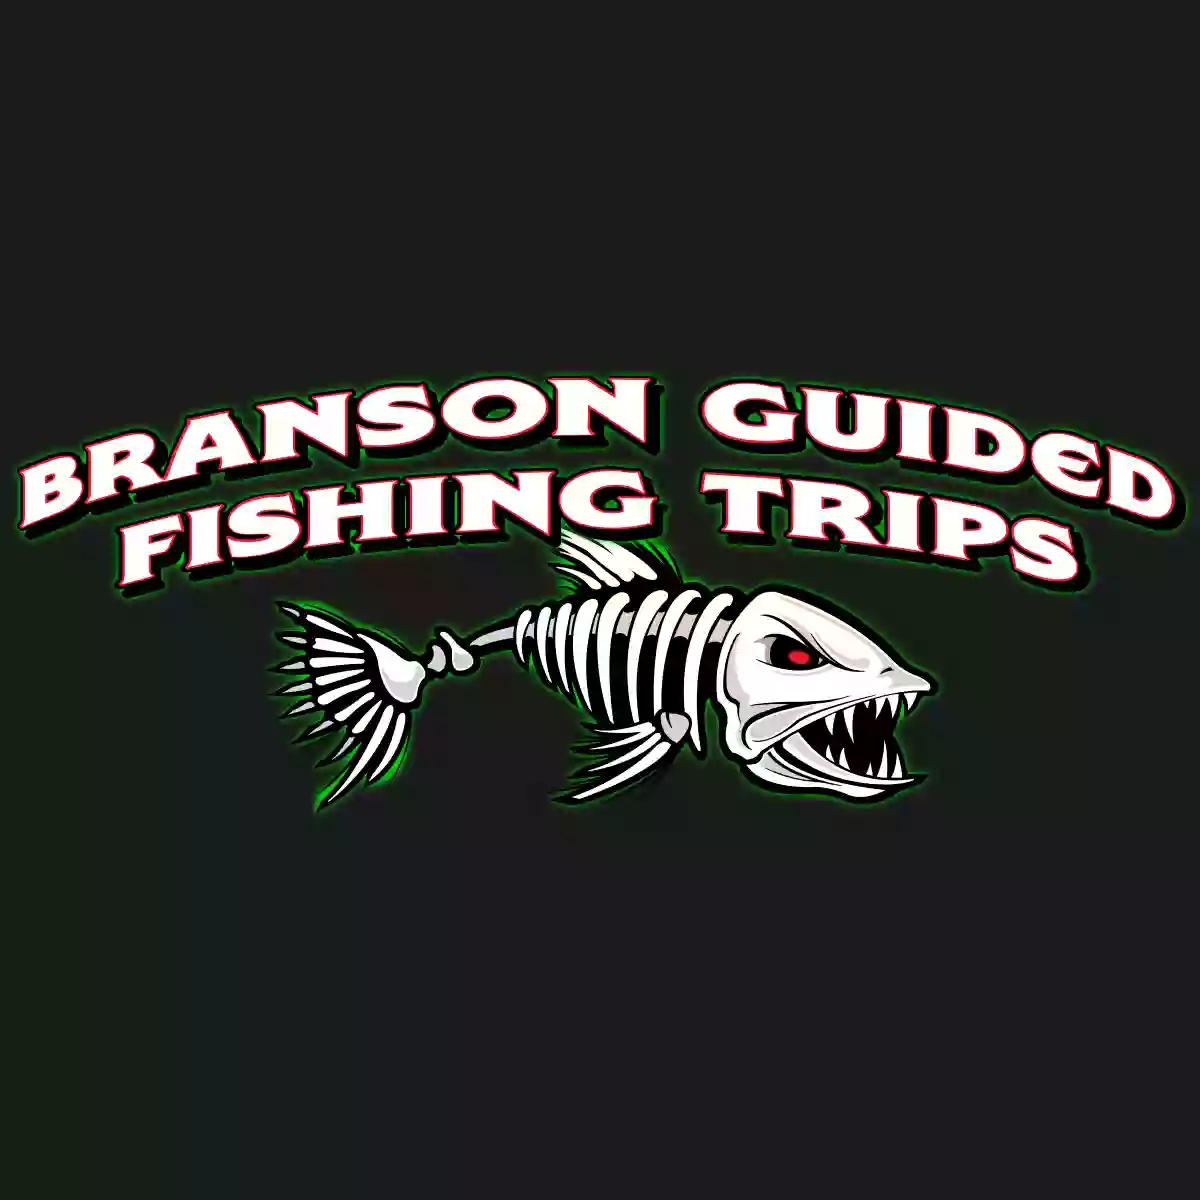 BRANSON GUIDED FISHING TRIPS